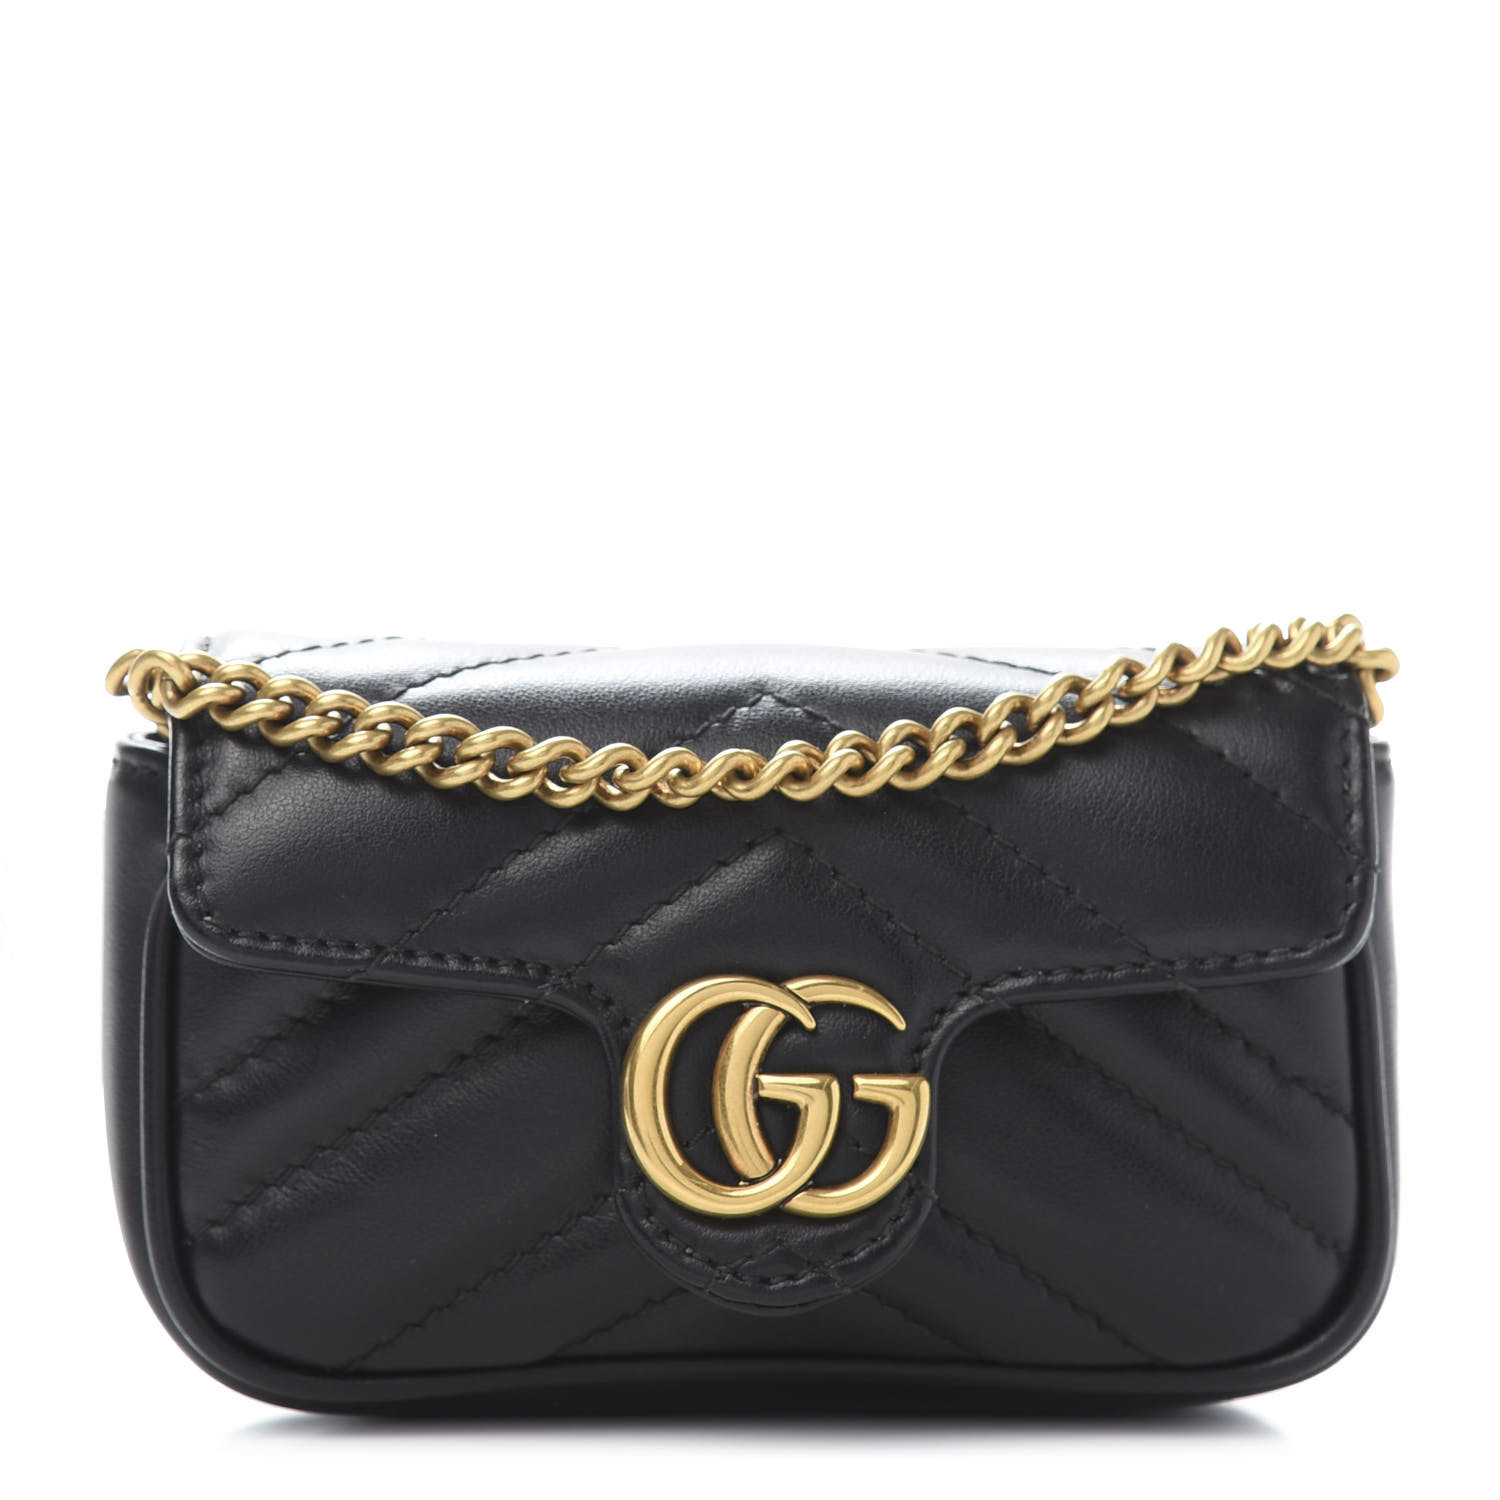 gucci coin purse on chain